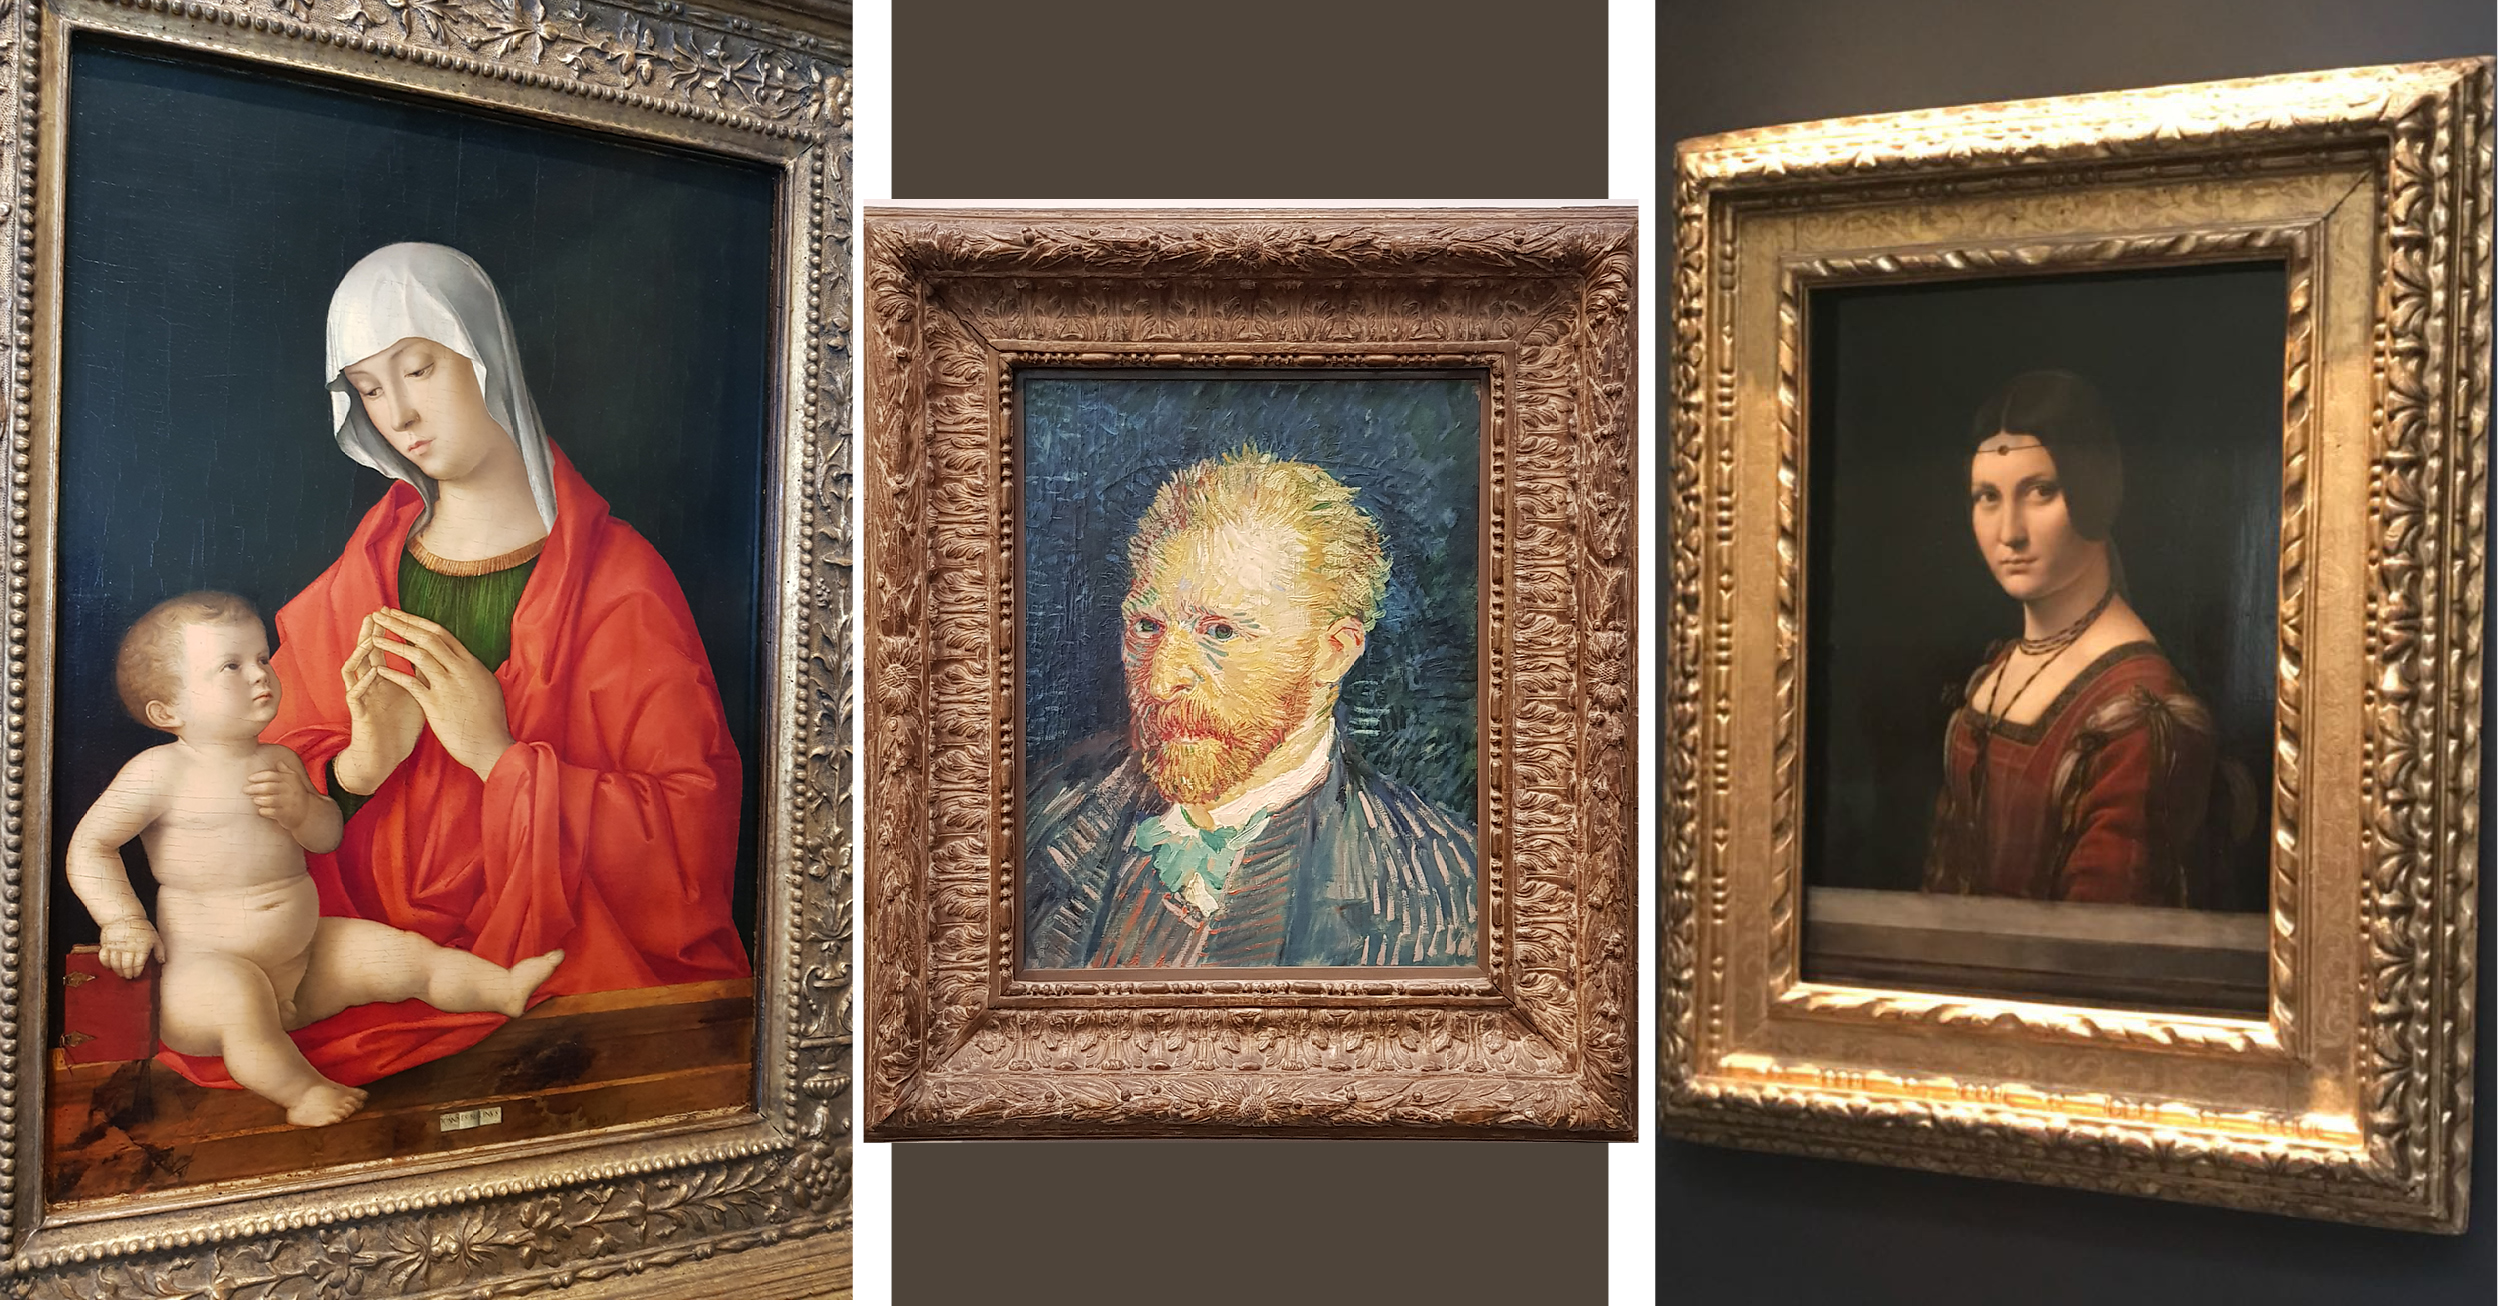 Paintings by Leonardo da Vinci and Vincent van Gogh